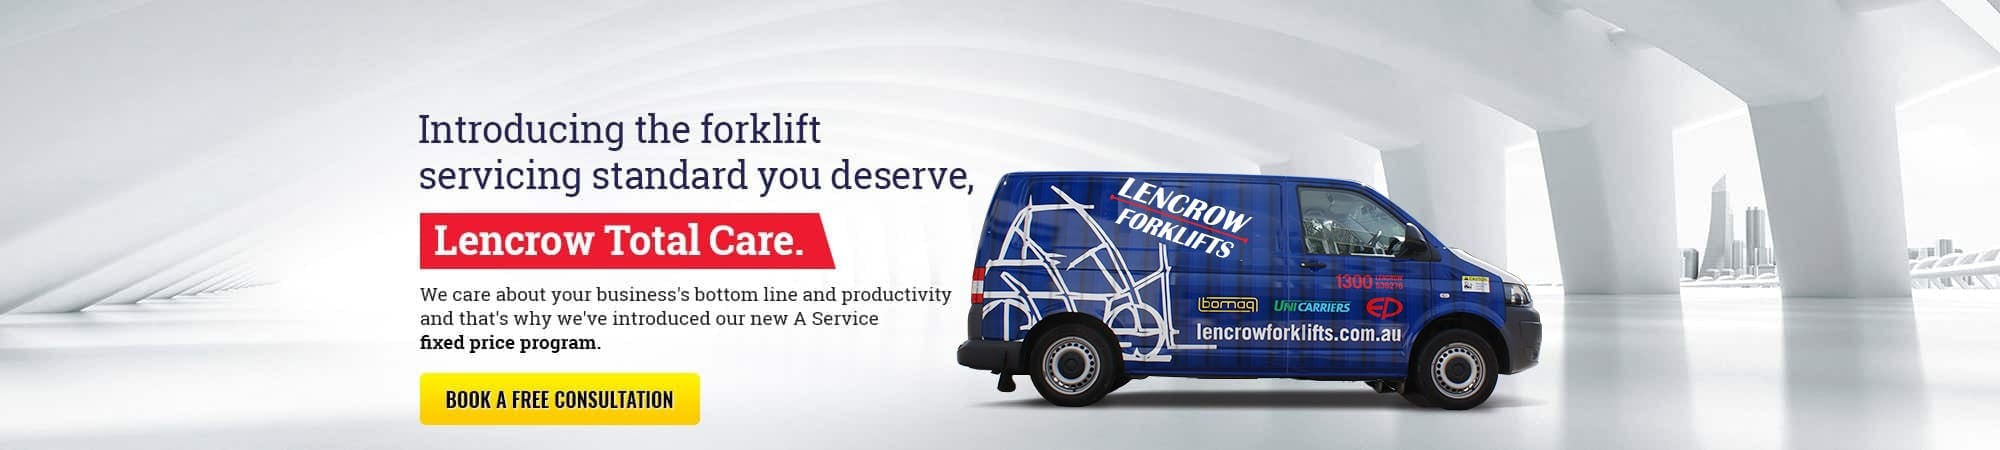 Introducing the forklift servicing standard you deserve, Lencrow Total